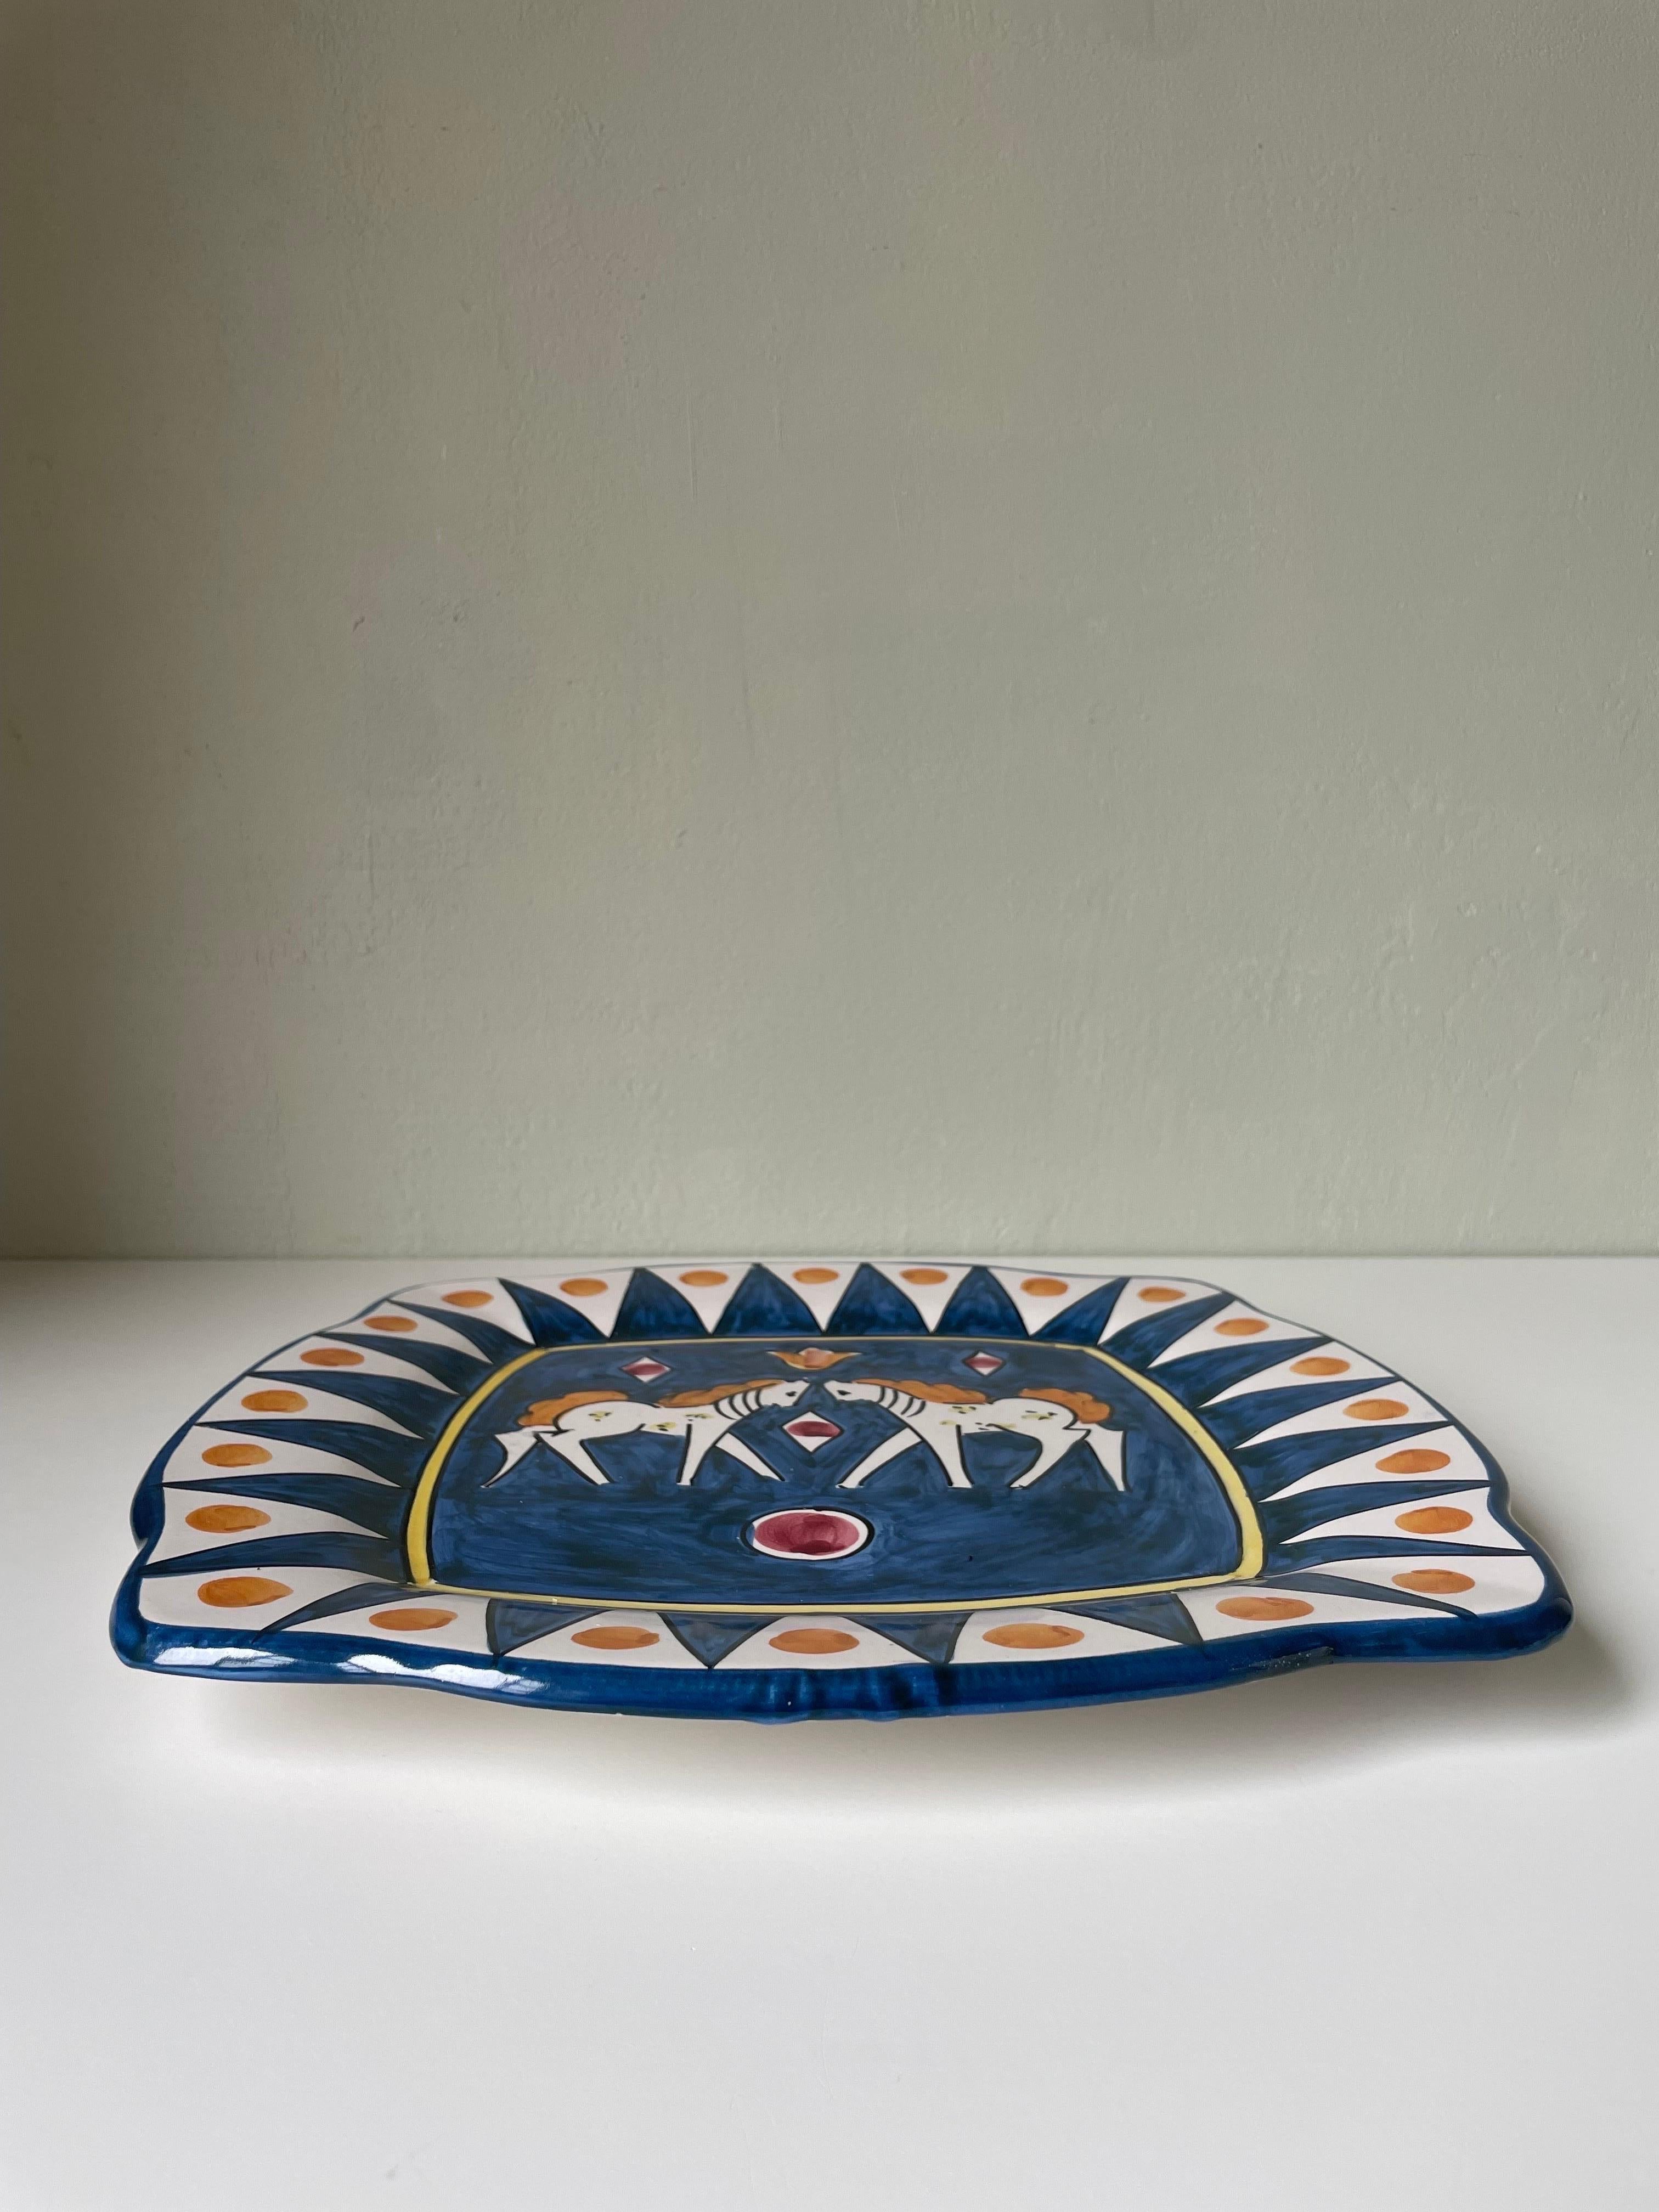 Glazed Ceramica Artistica Solimene Blue, White and Orange Decorative Dish Plate, Italy